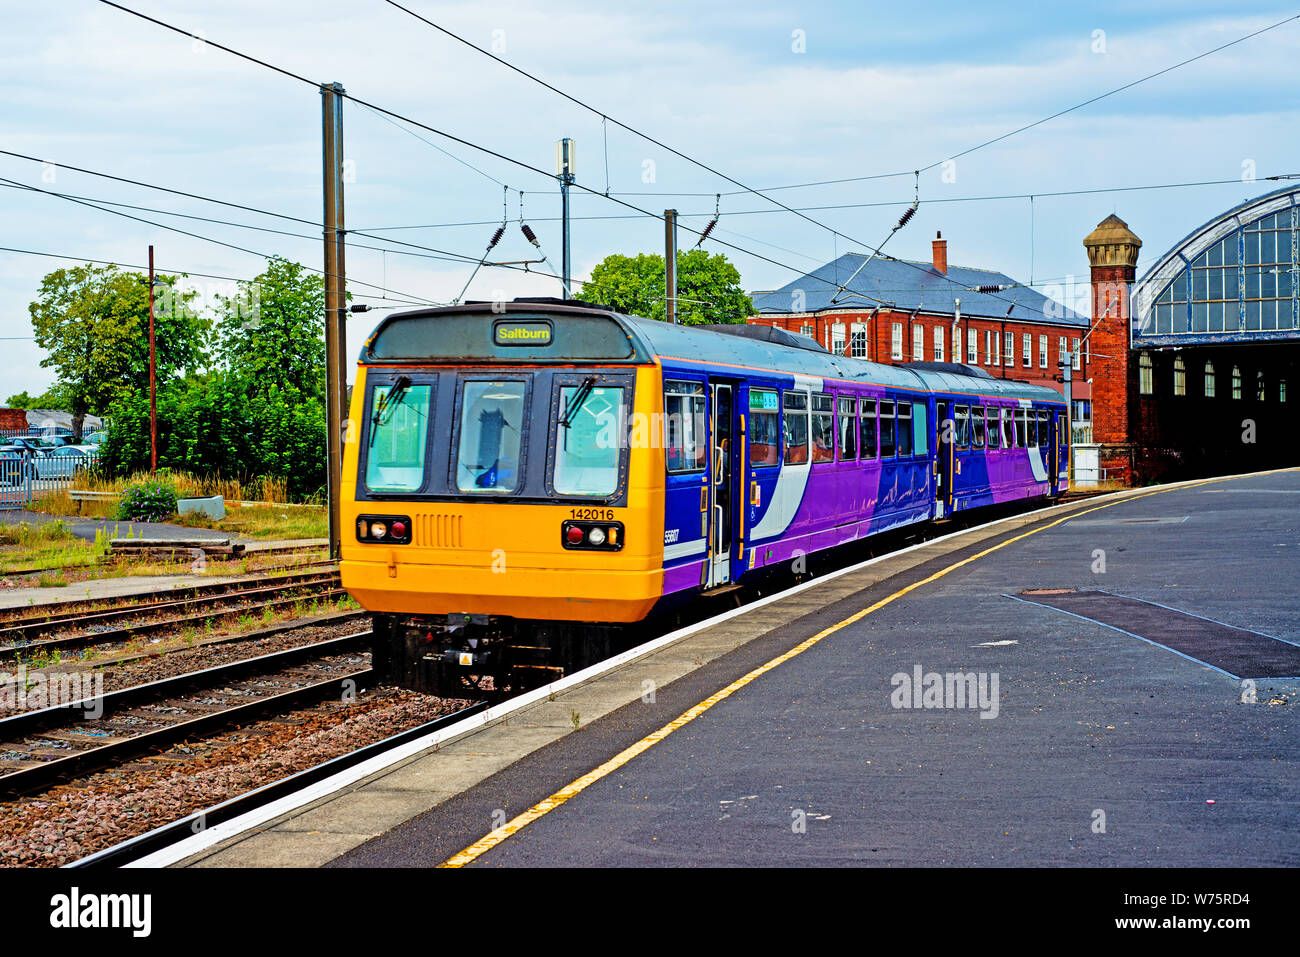 Class 142 pacer at Darlington Railway Station, Darlington, England Stock Photo